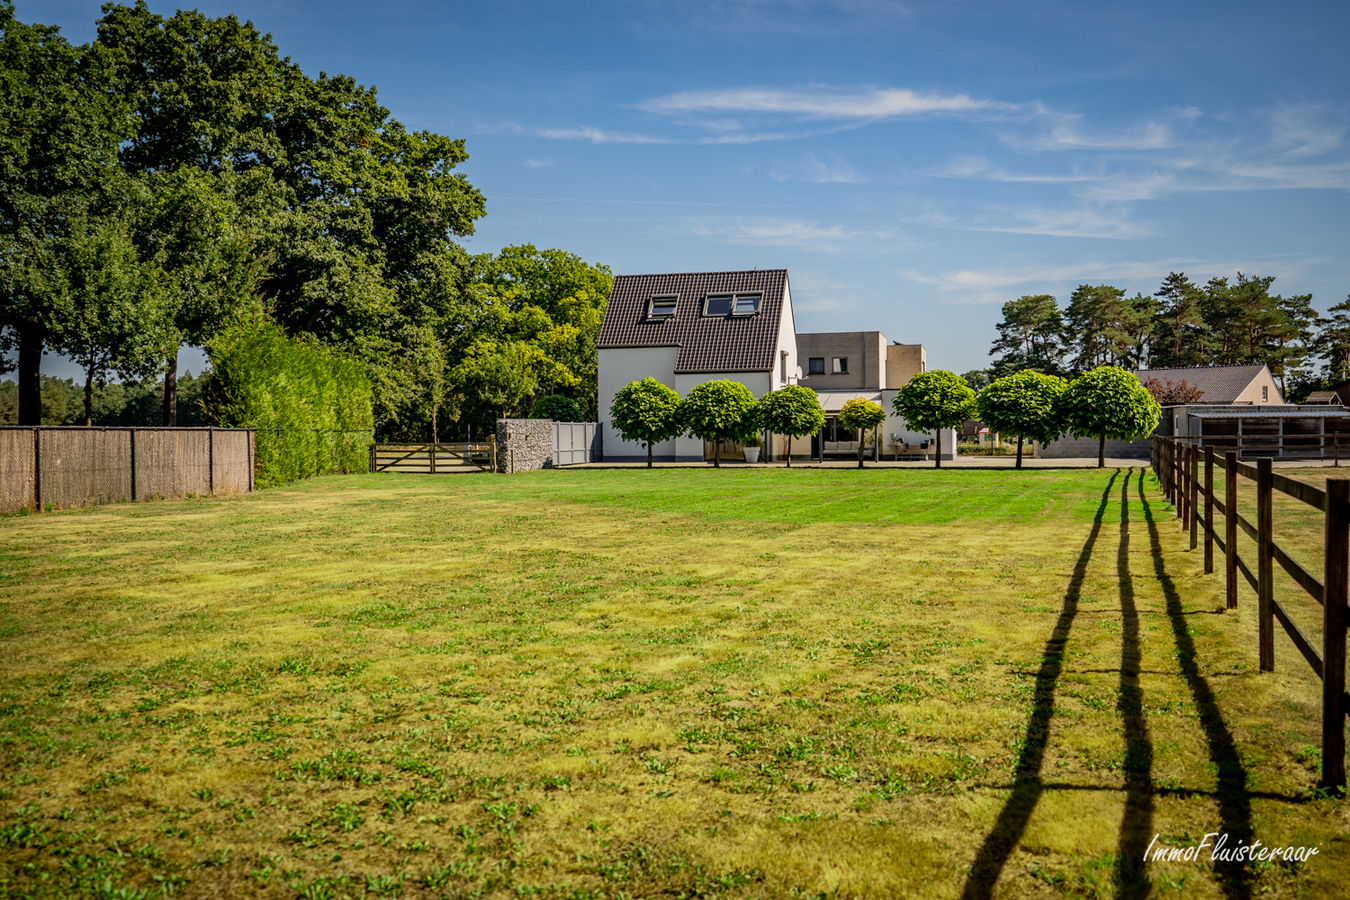 Property sold | under restrictions in Wijshagen